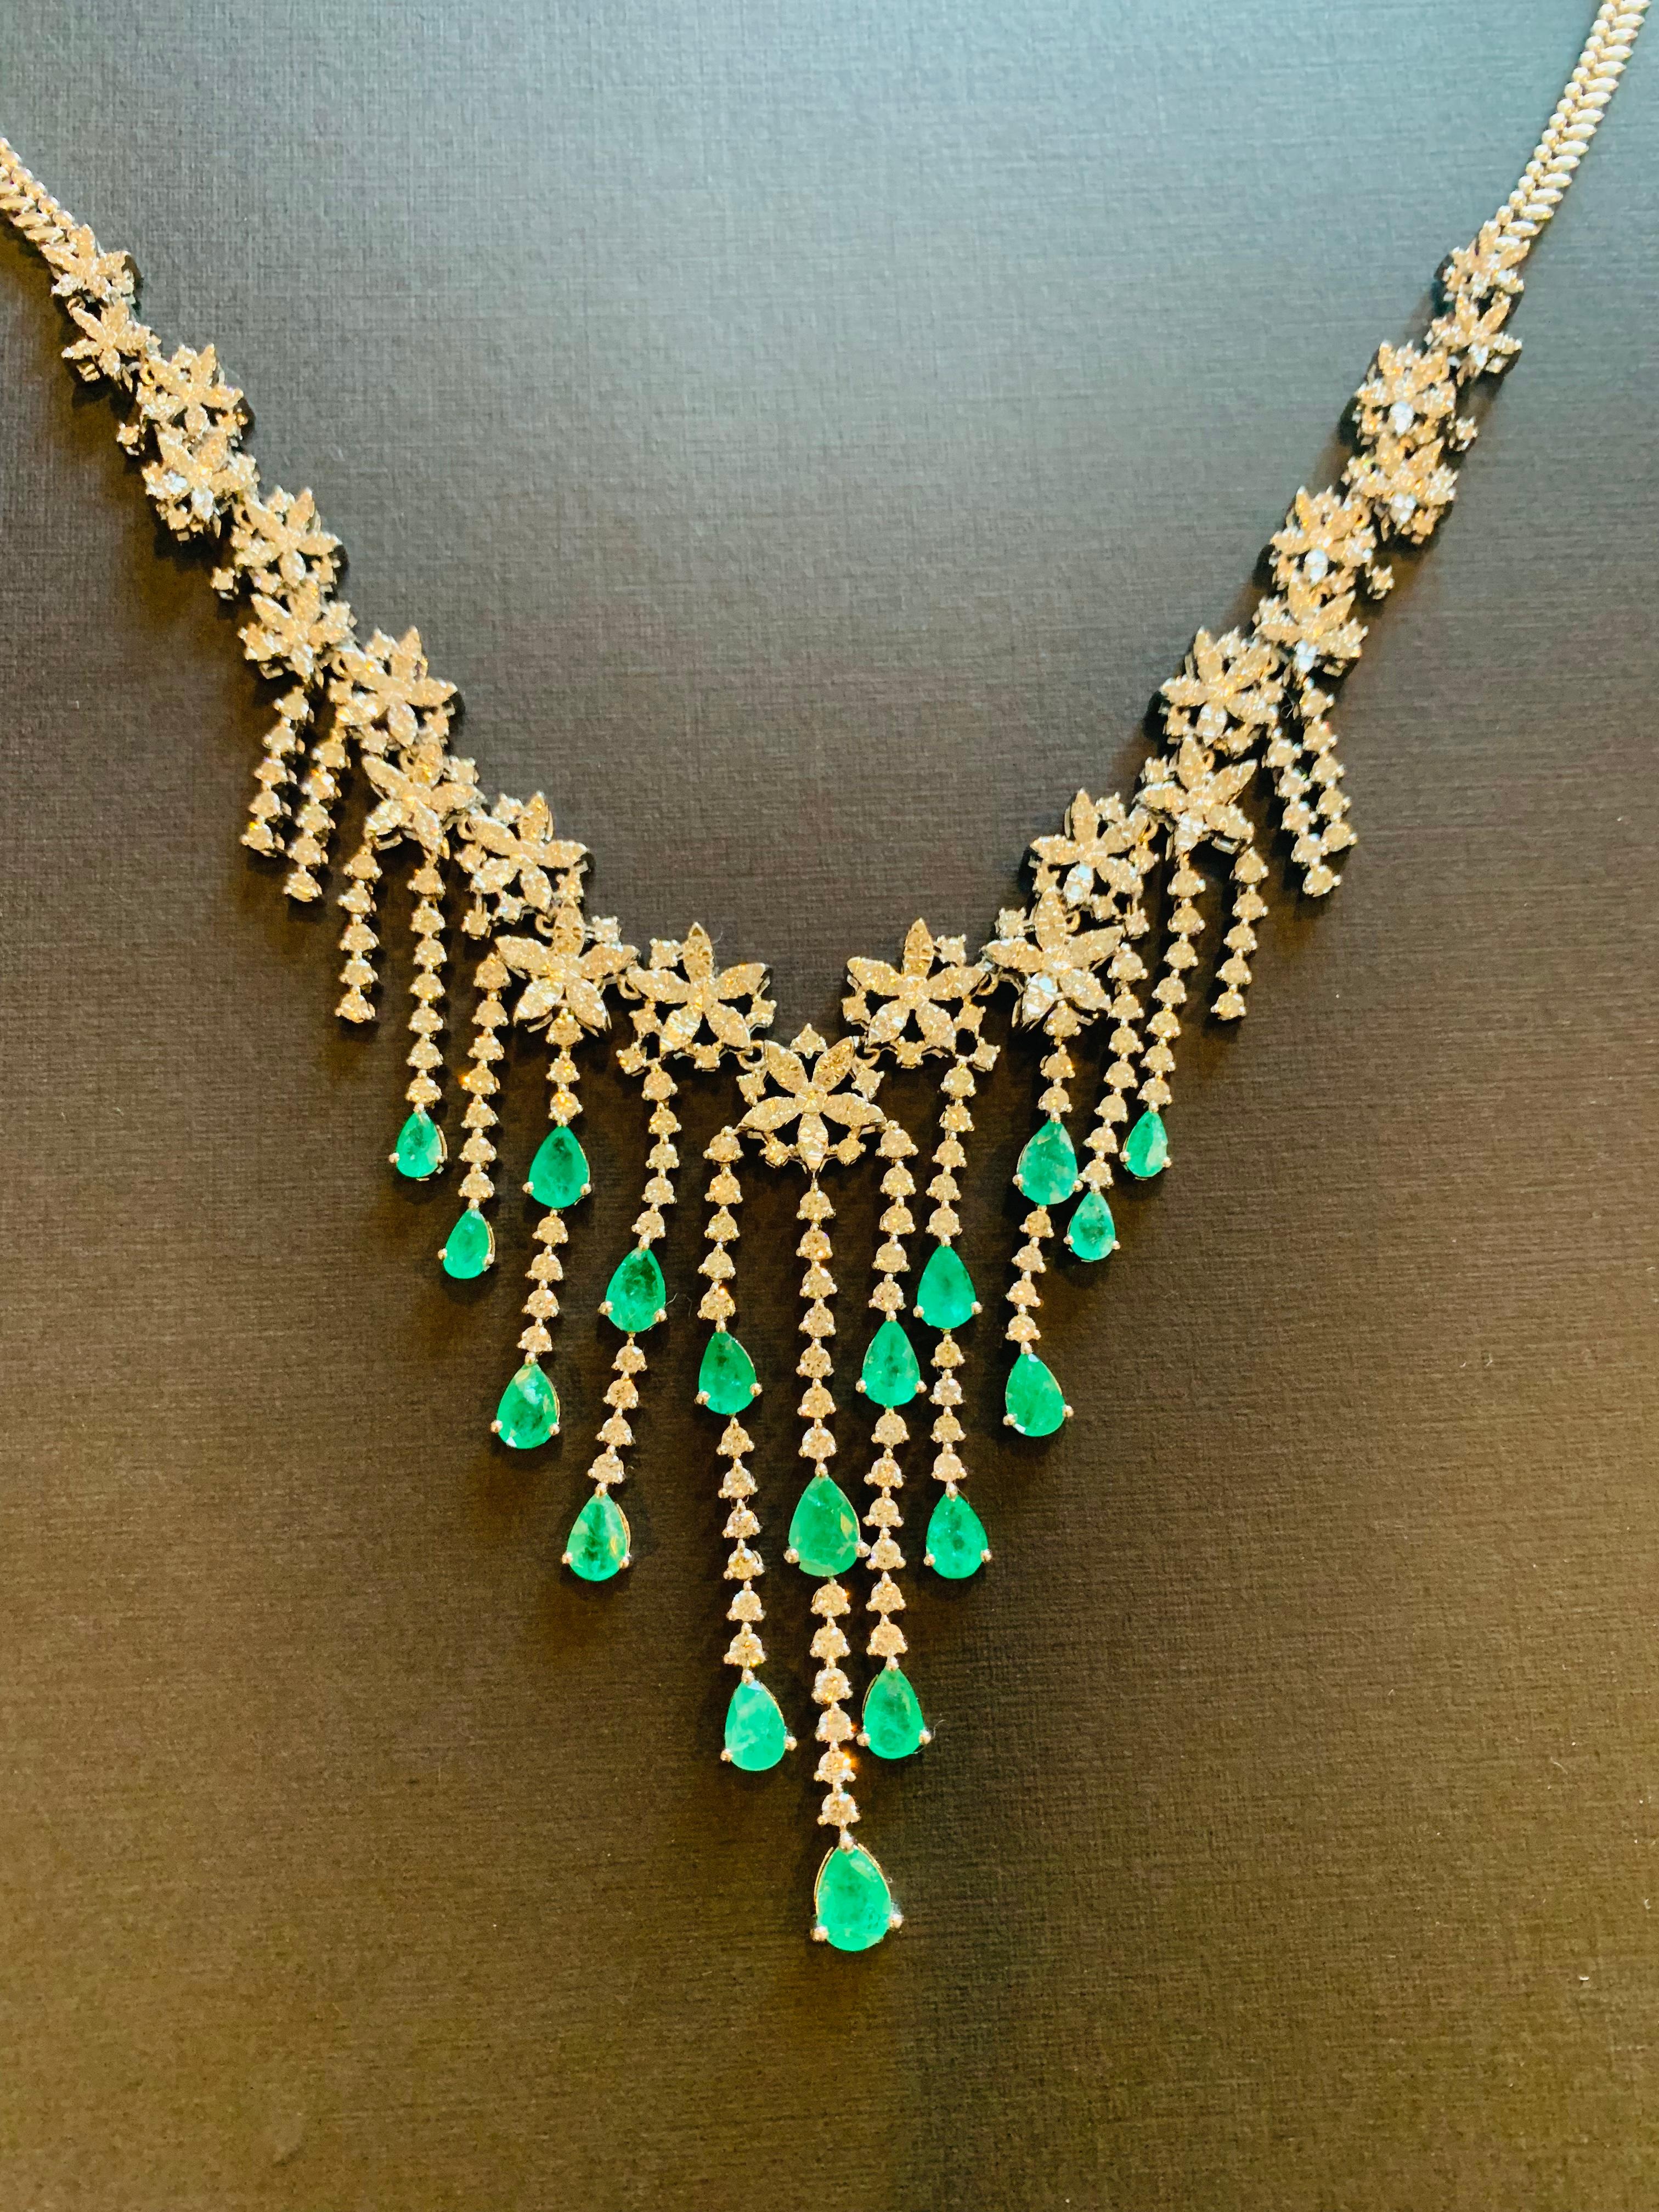 7.30 Carat Diamond Emerald 14 Karat White Gold Statement Necklace In New Condition For Sale In Hoffman Estate, IL